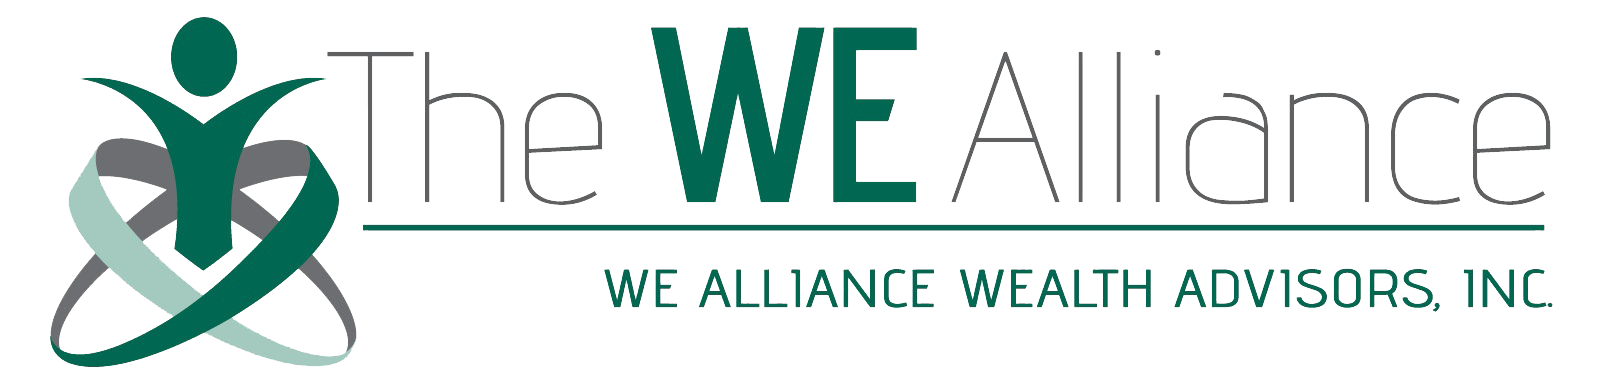 We Alliance Wealth Advisory Group